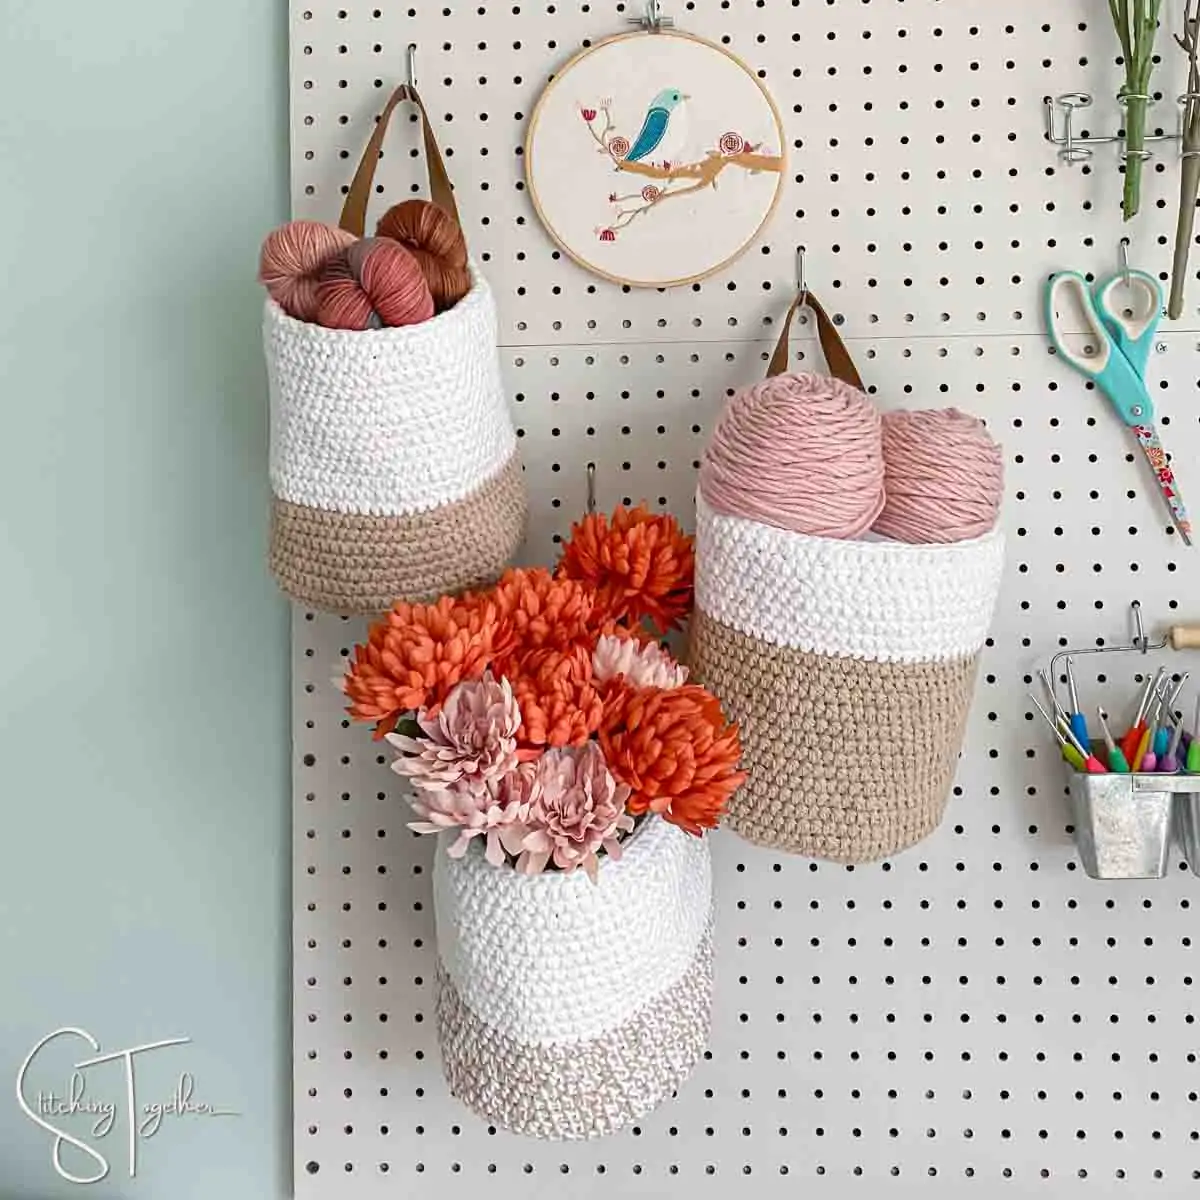 3 hanging crochet baskets on a pegboard